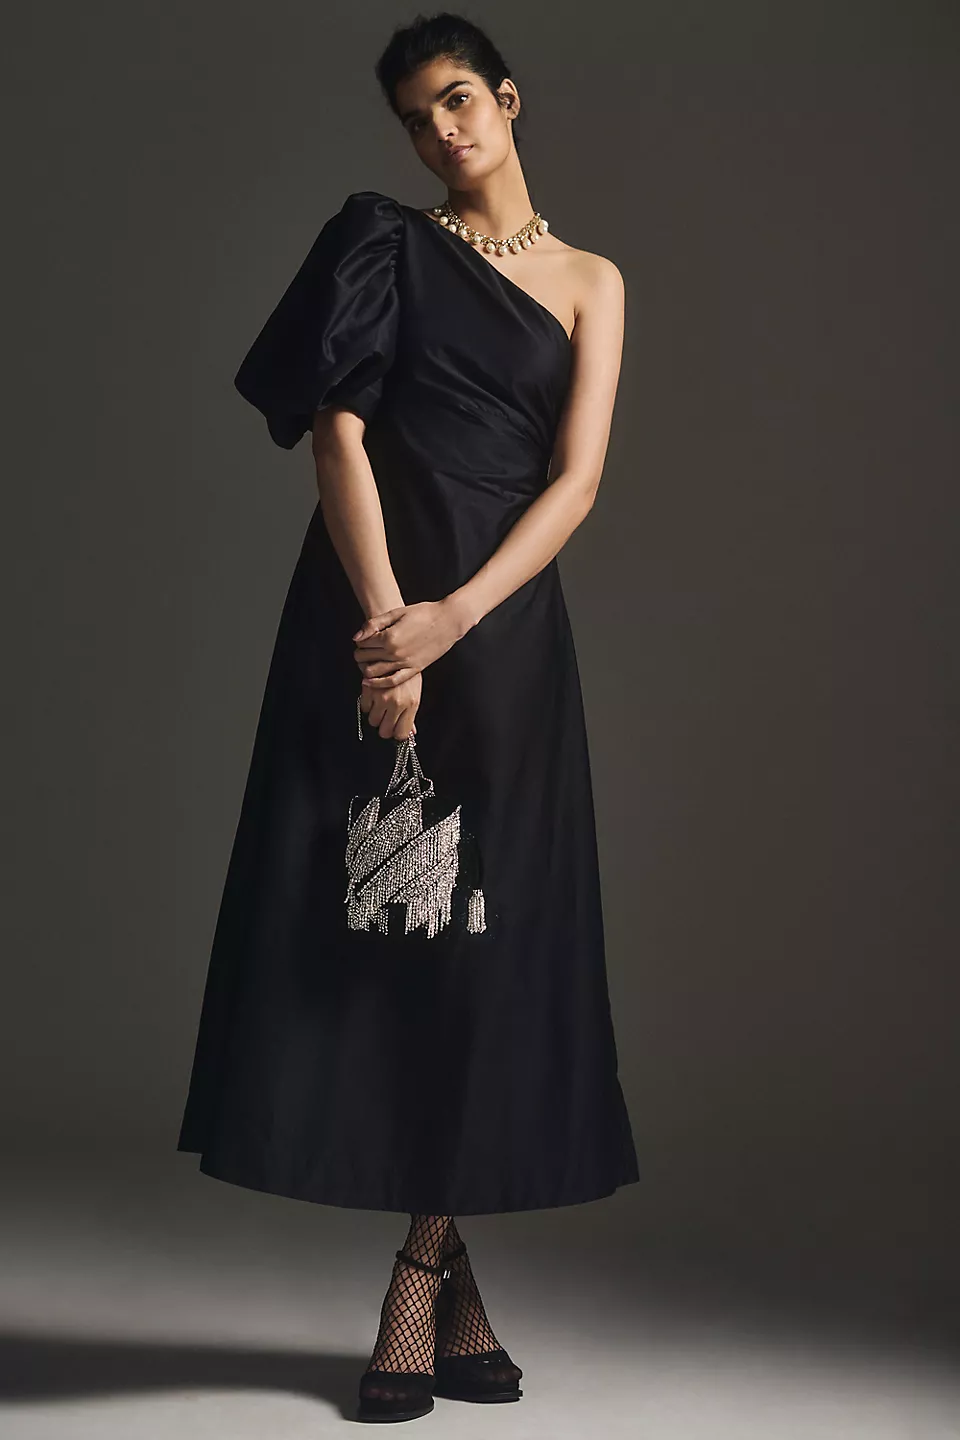 dramatic one-shouldered black cocktail dress